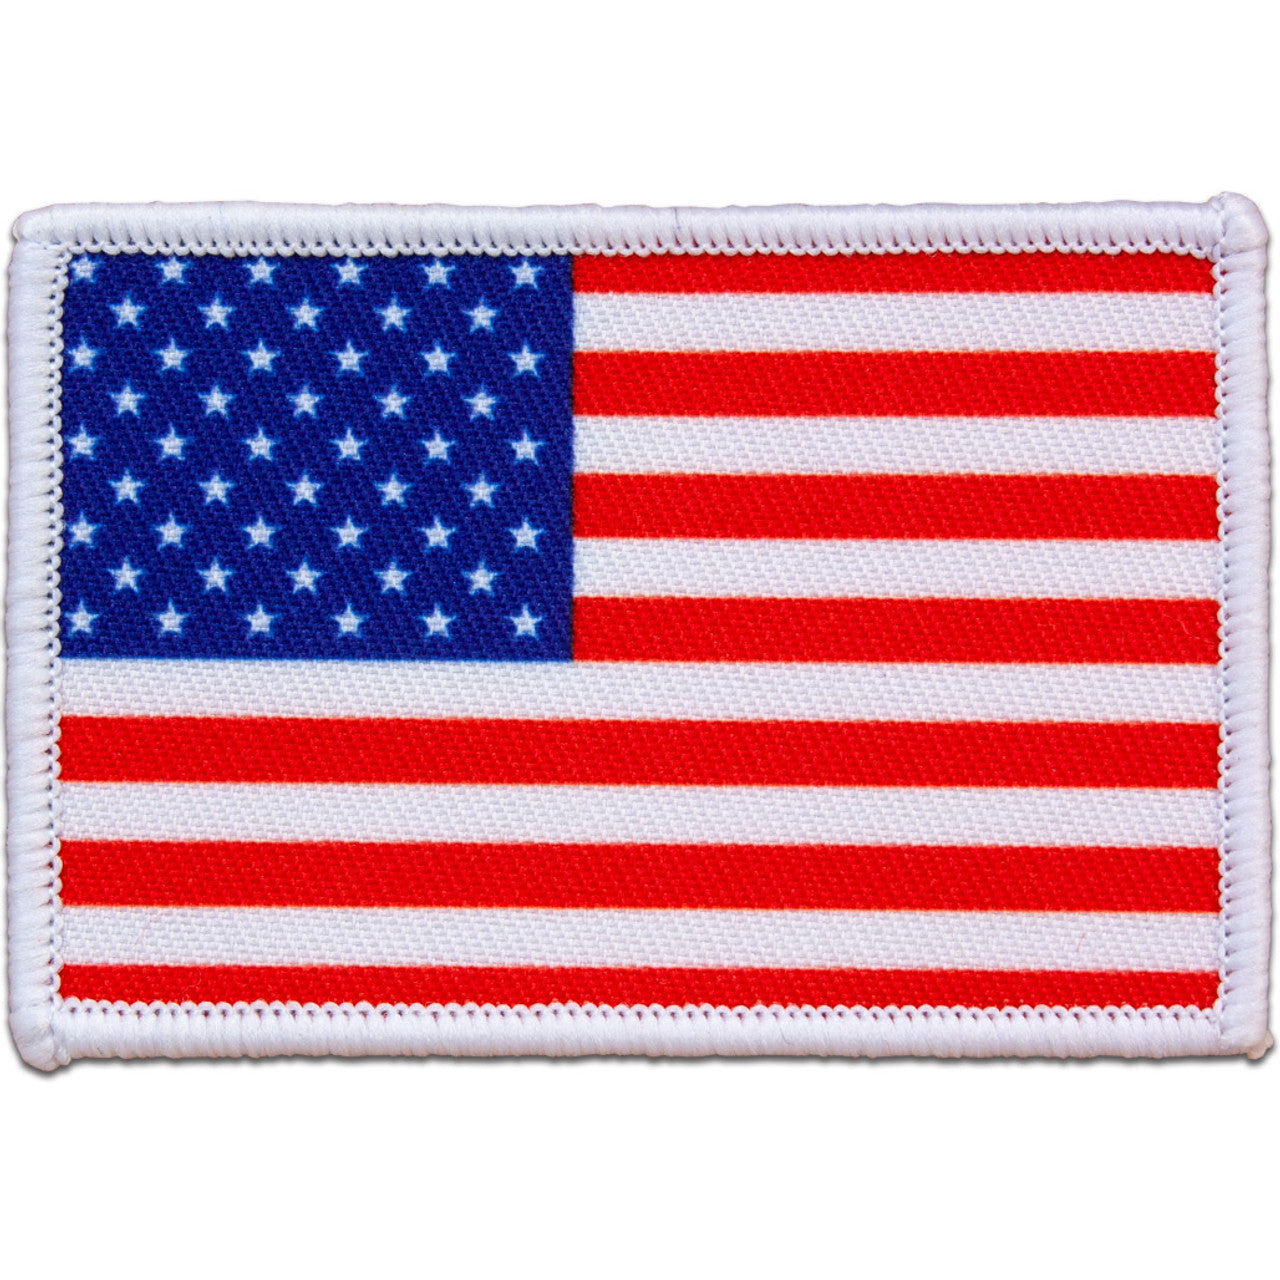 "U.S FLAG" MORALE PATCH